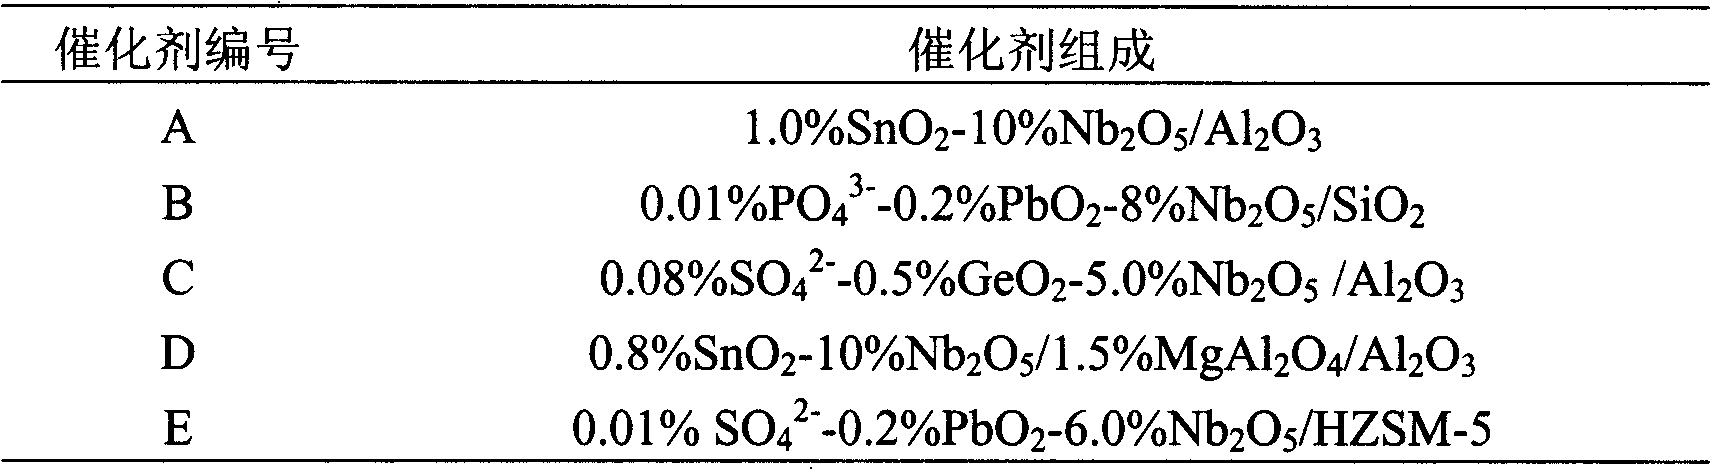 Method for preparing propylene glycol ether